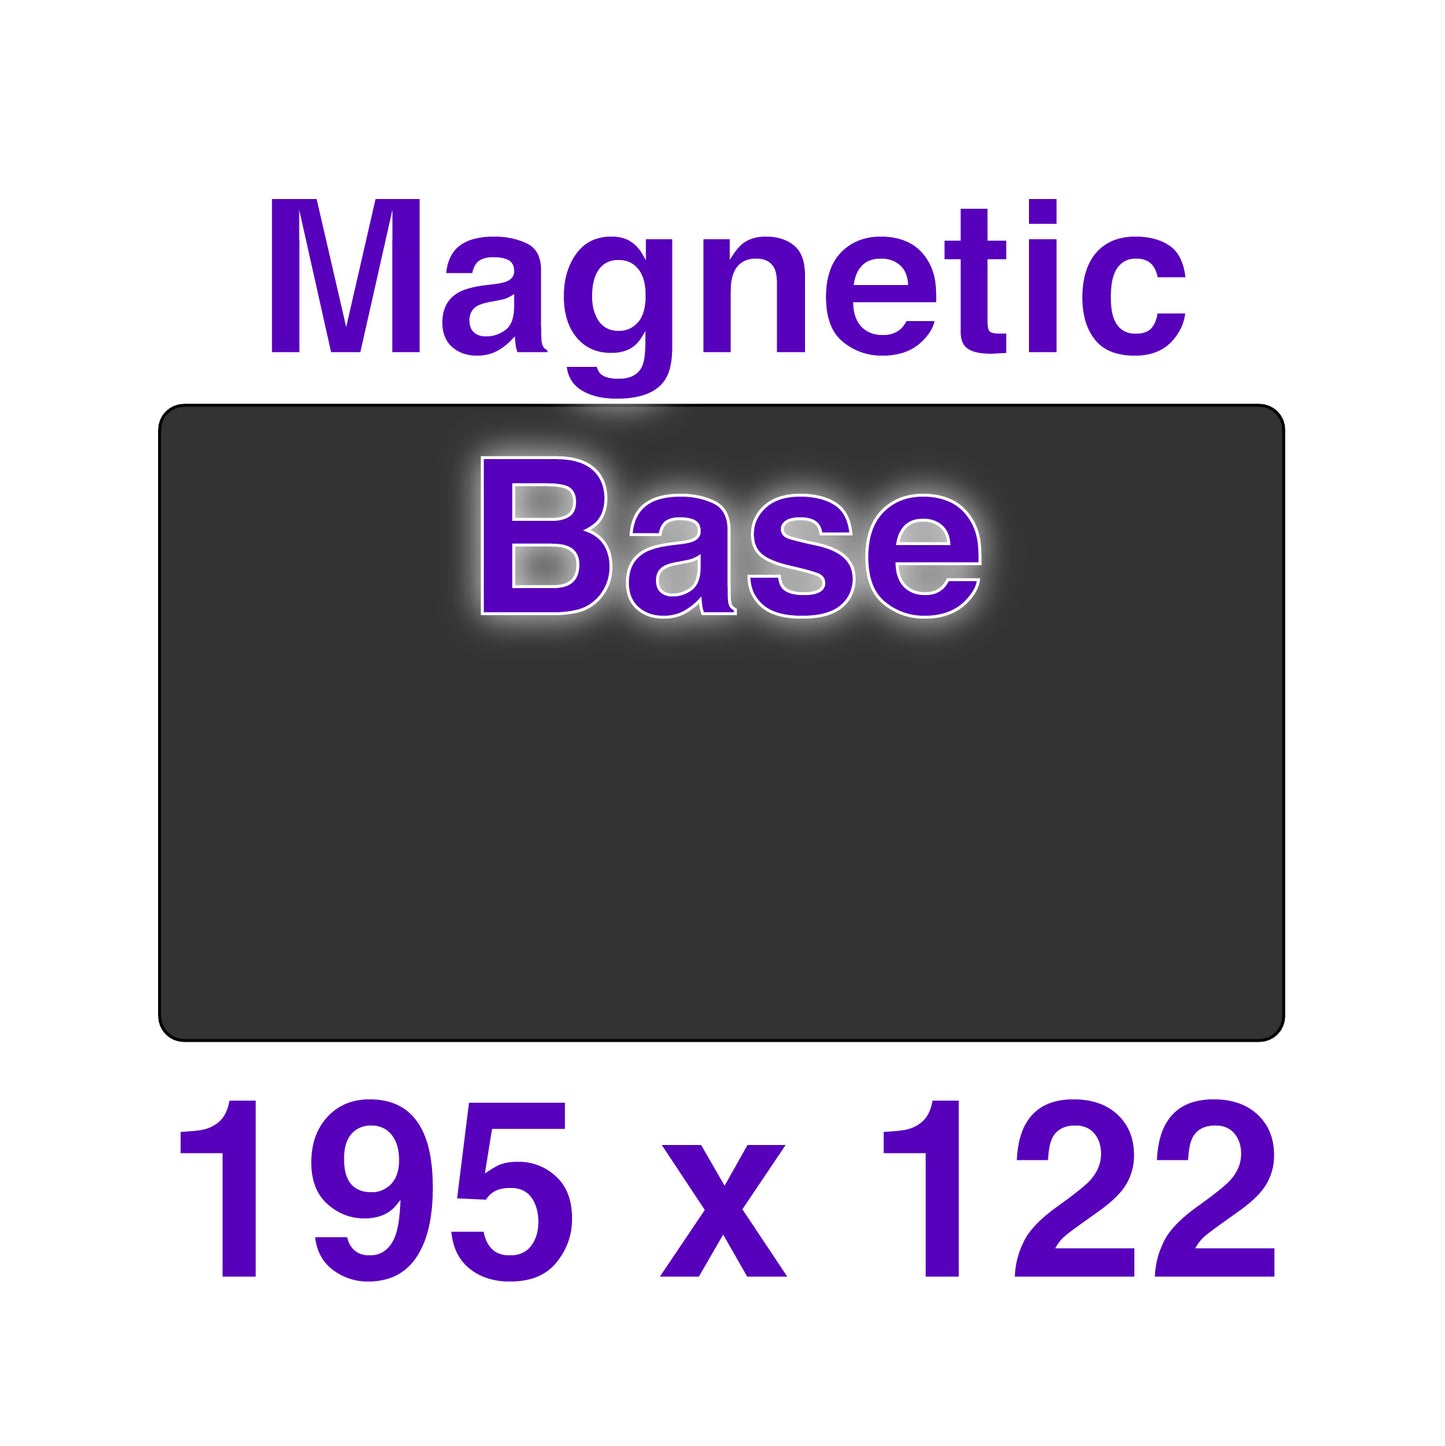 Magnetic Base - 195 x 122